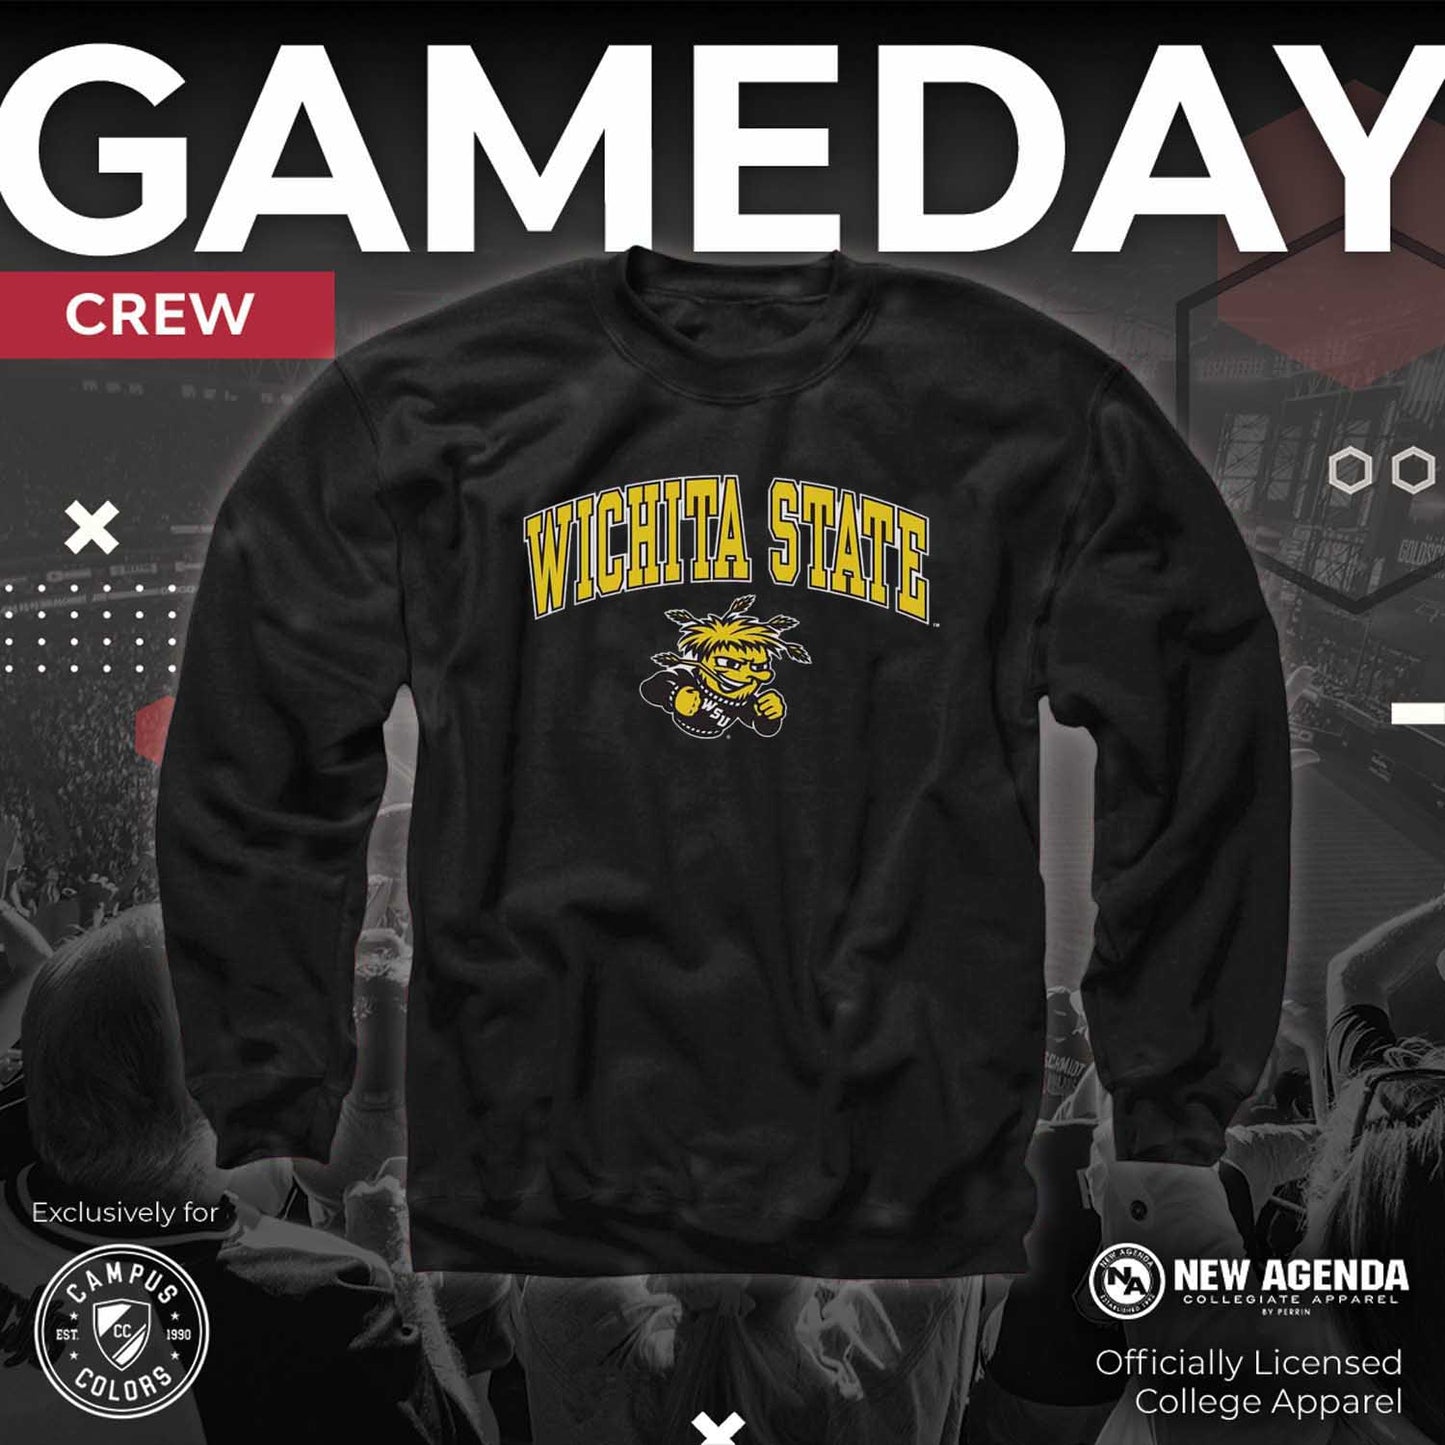 Wichita State Shockers Adult Arch & Logo Soft Style Gameday Crewneck Sweatshirt - Black